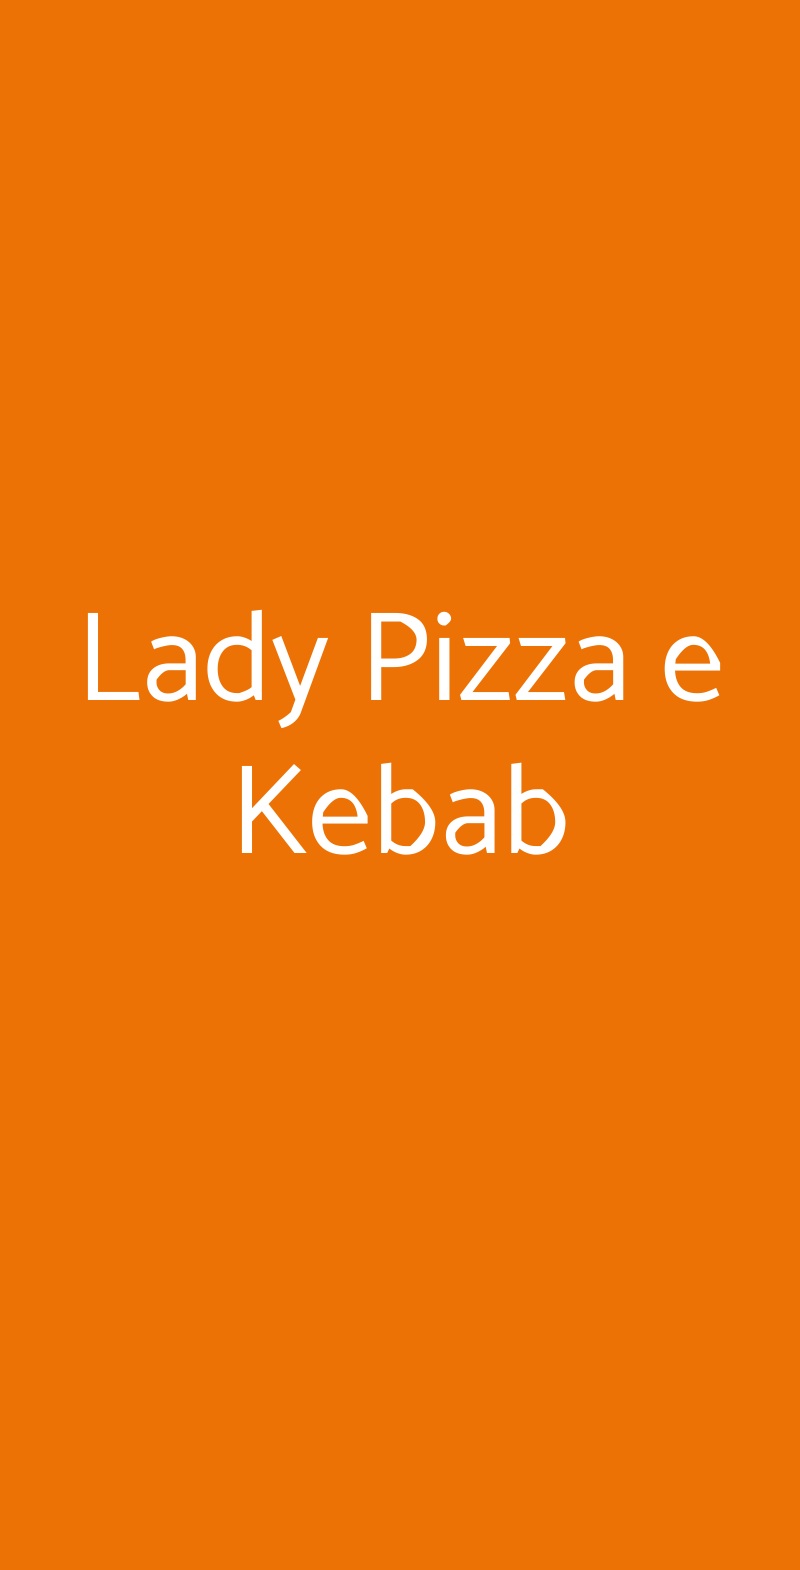 Lady Pizza e Kebab Parma menù 1 pagina